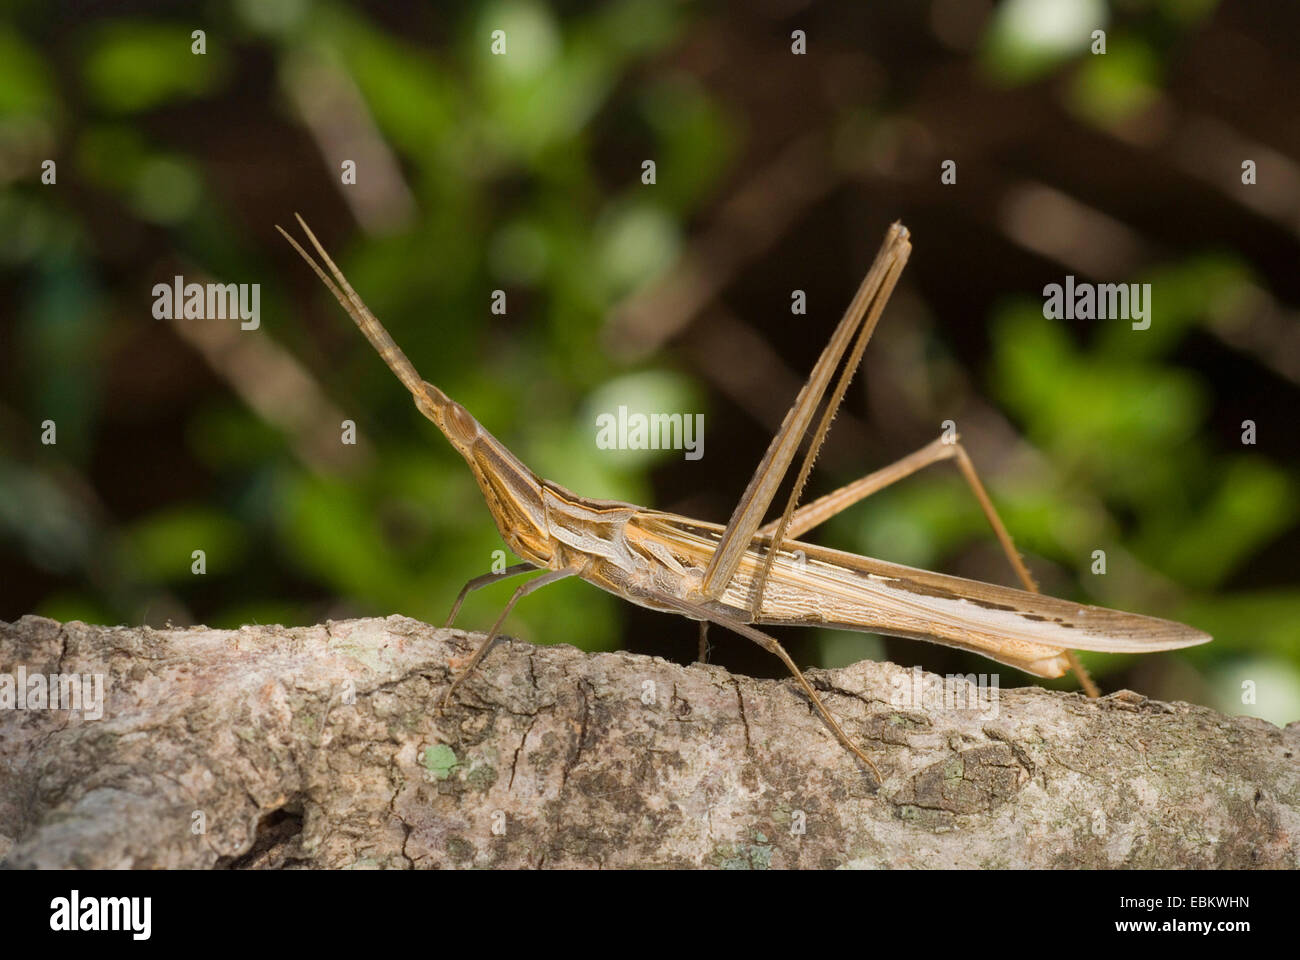 Snouted grasshopper, Long-headed grasshopper, Mediterranean Slant-faced Grasshopper (Acrida hungarica, Acrida ungarica), sitting on a branch, France, Corsica Stock Photo